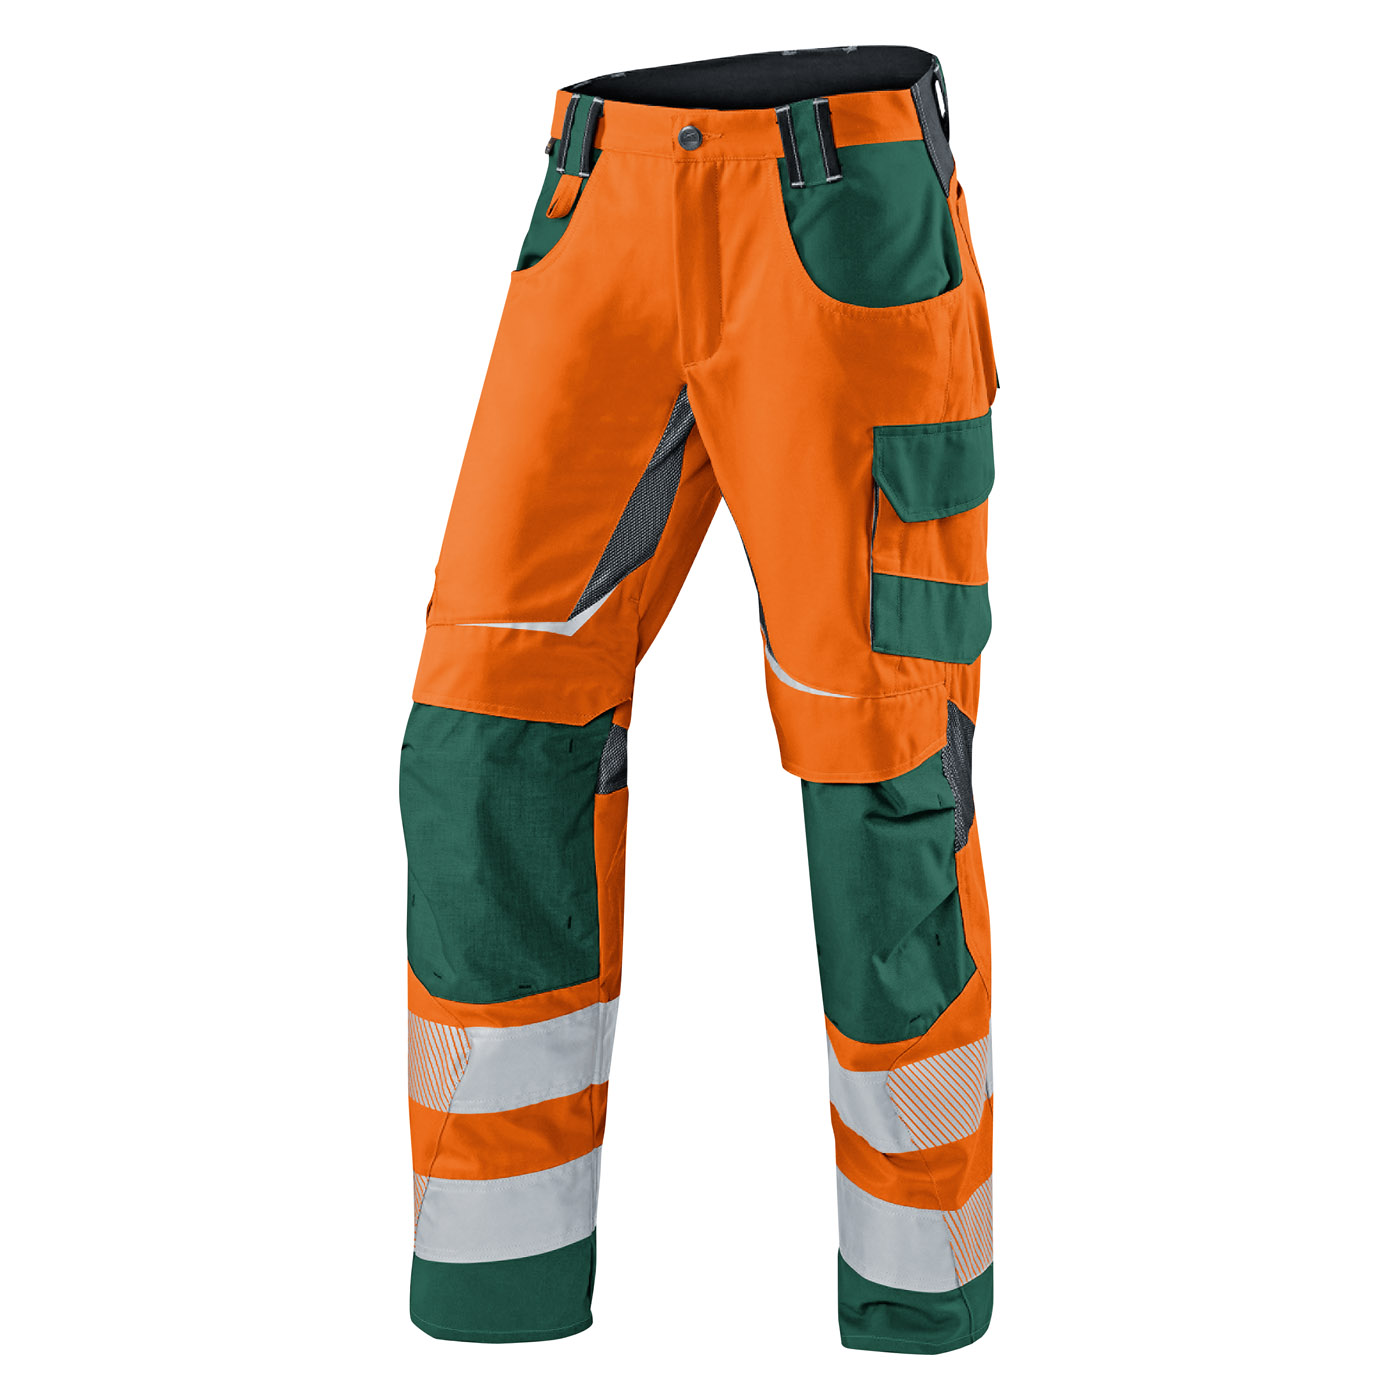 KÜBLER REFLECTIQ Summer Trousers PPE 2